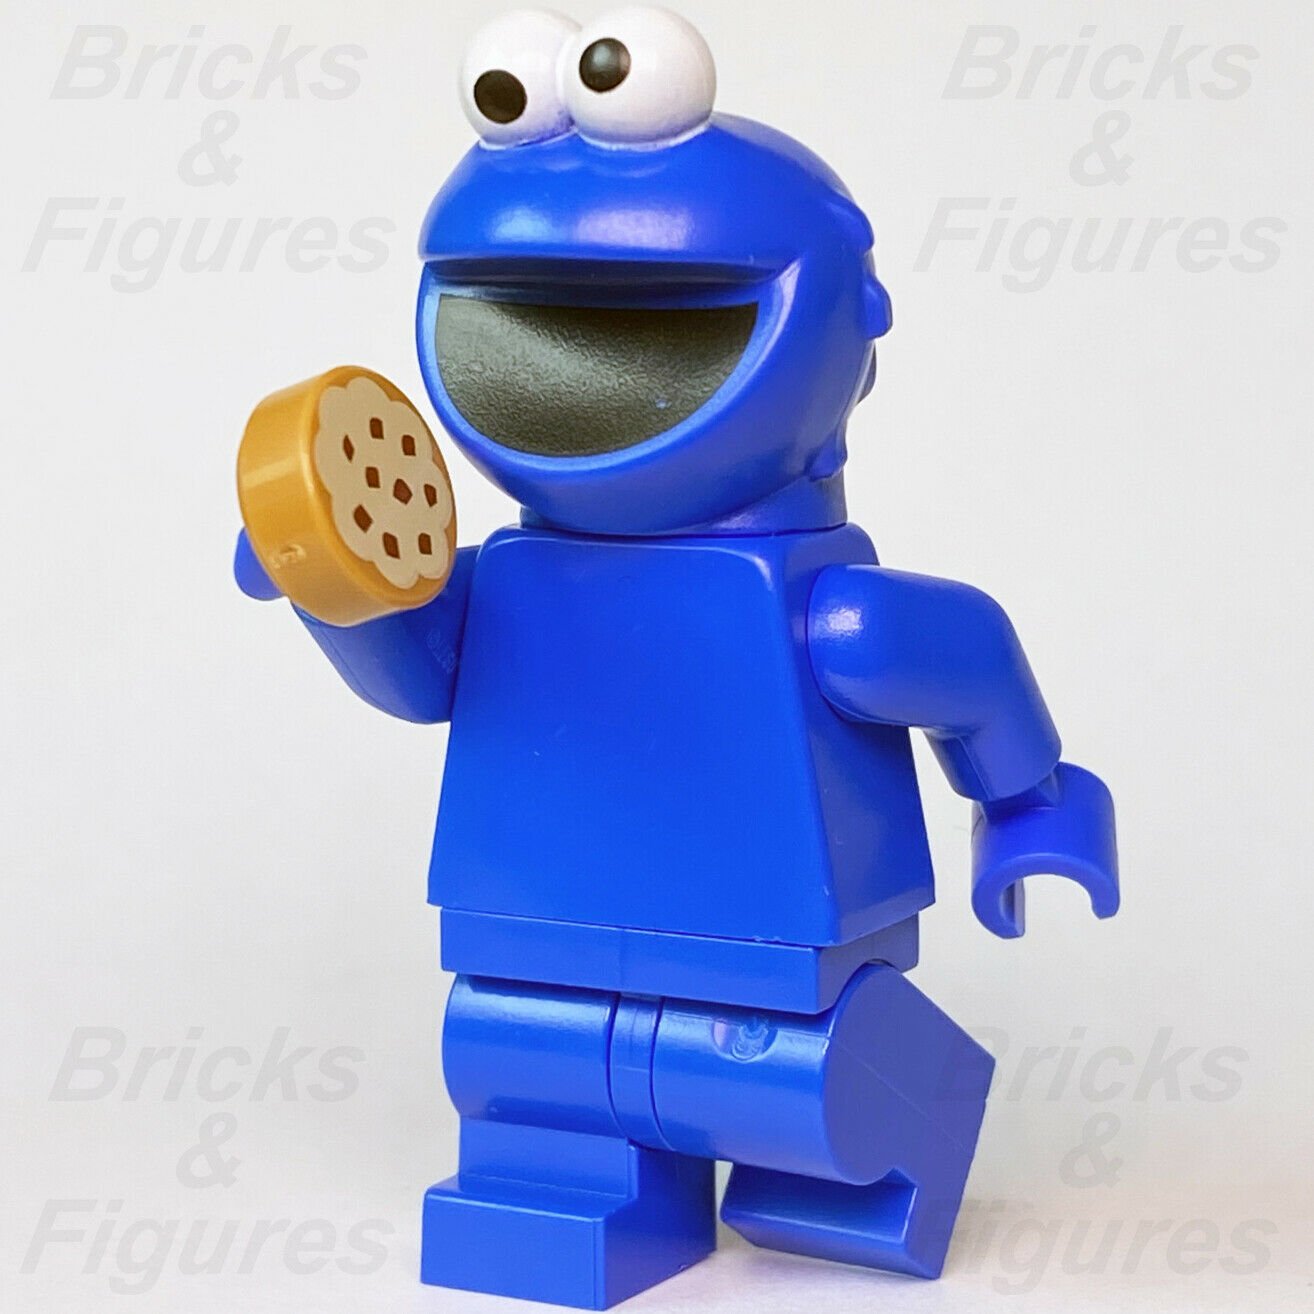 New Ideas LEGO Cookie Monster Sesame Street Minifigure from set 21324 Minifig - Bricks & Figures